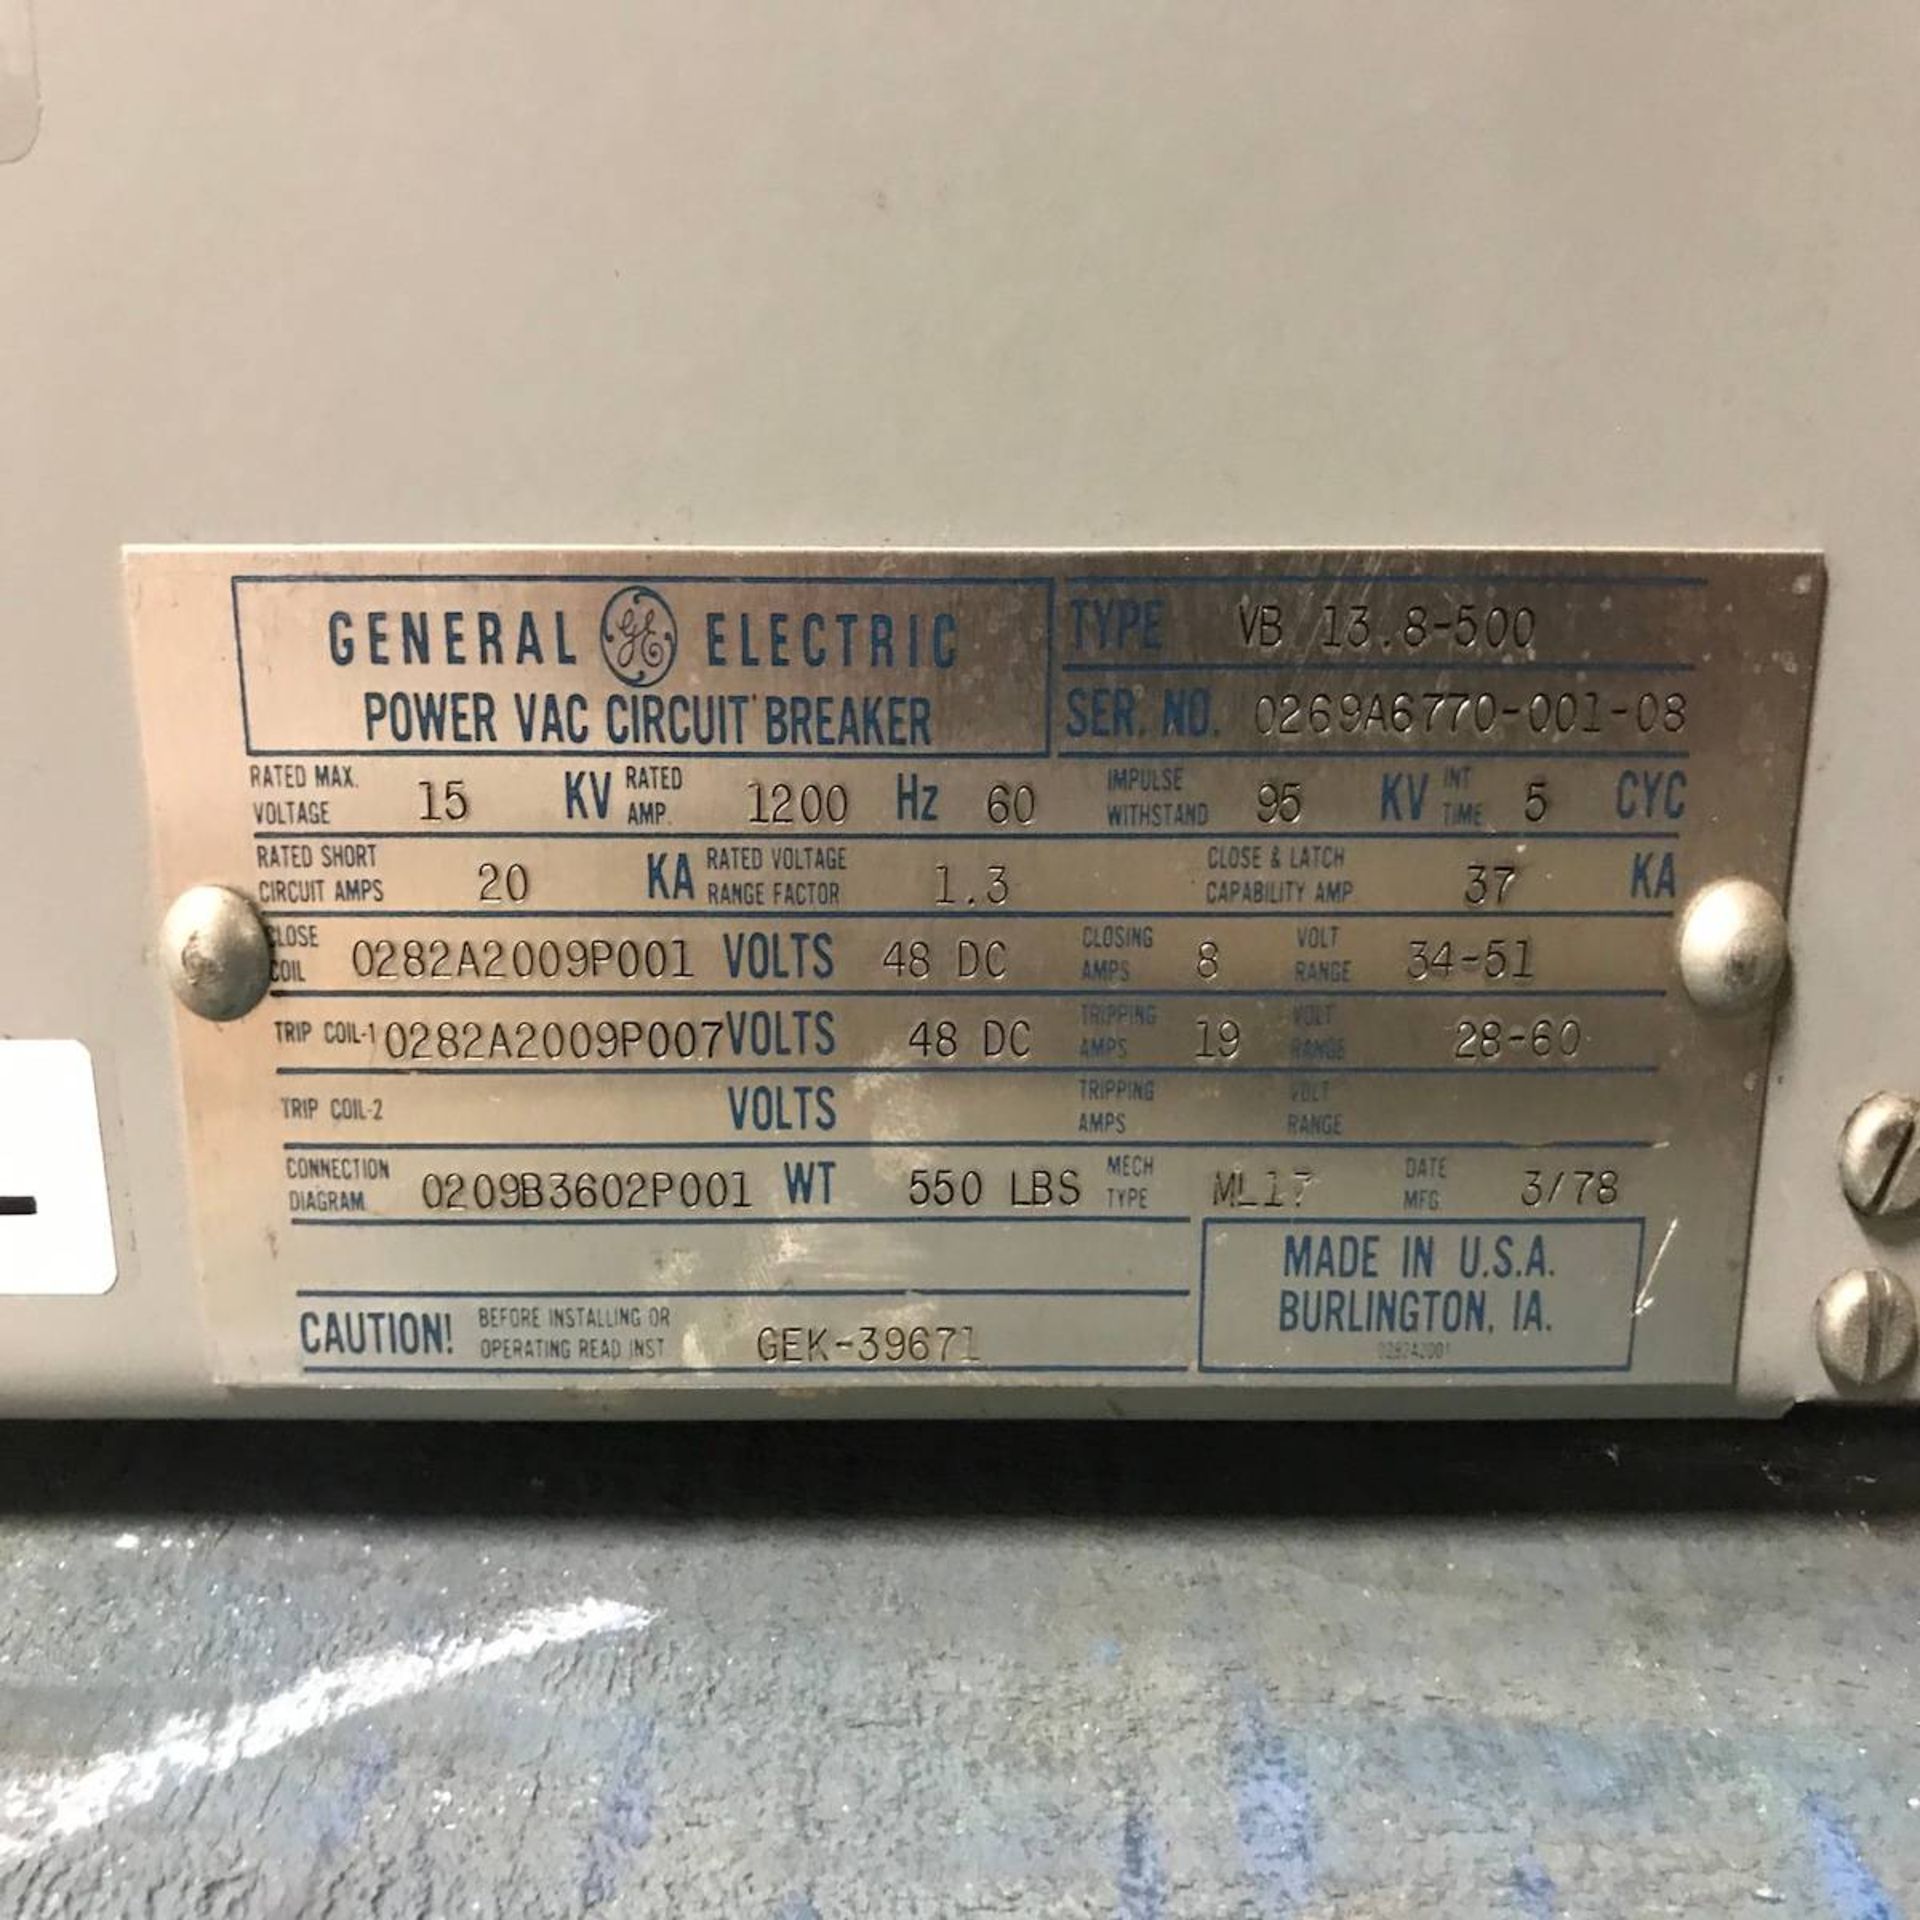 General Electric VB 13.8-500 Power Vac Circuit Breaker - Image 3 of 3